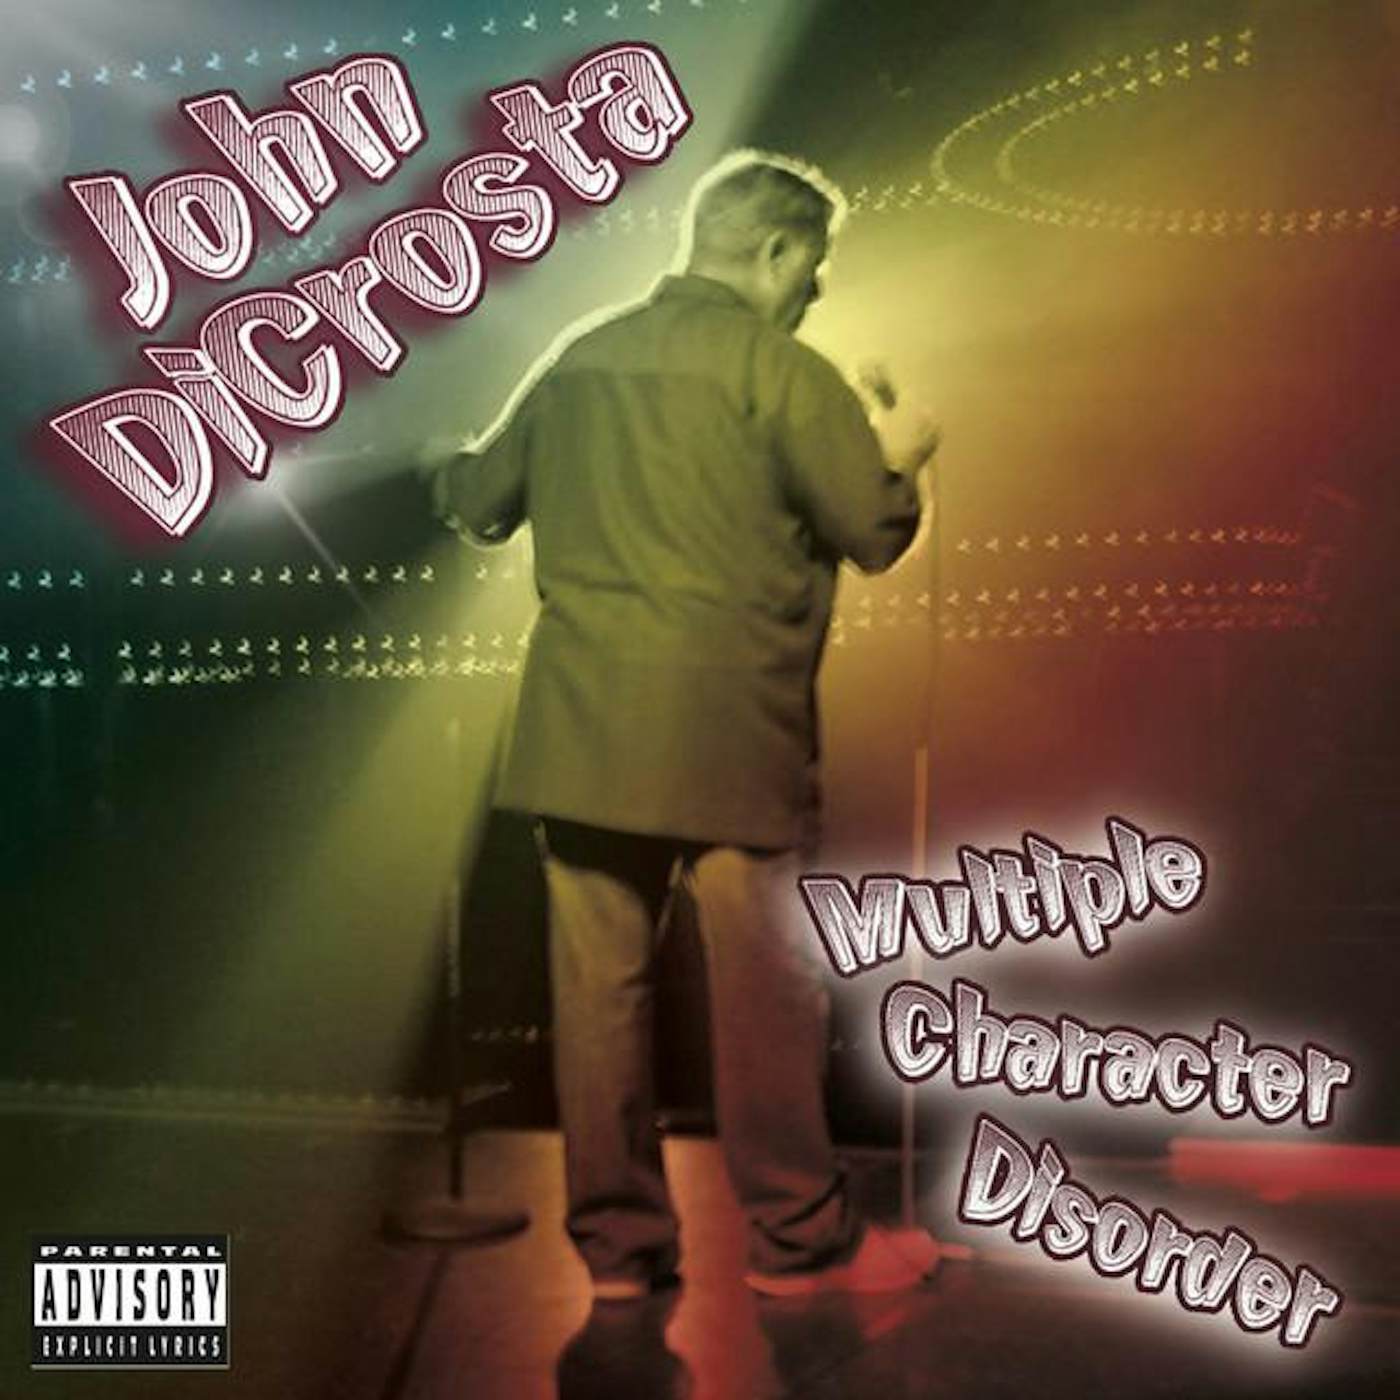 John DiCrosta